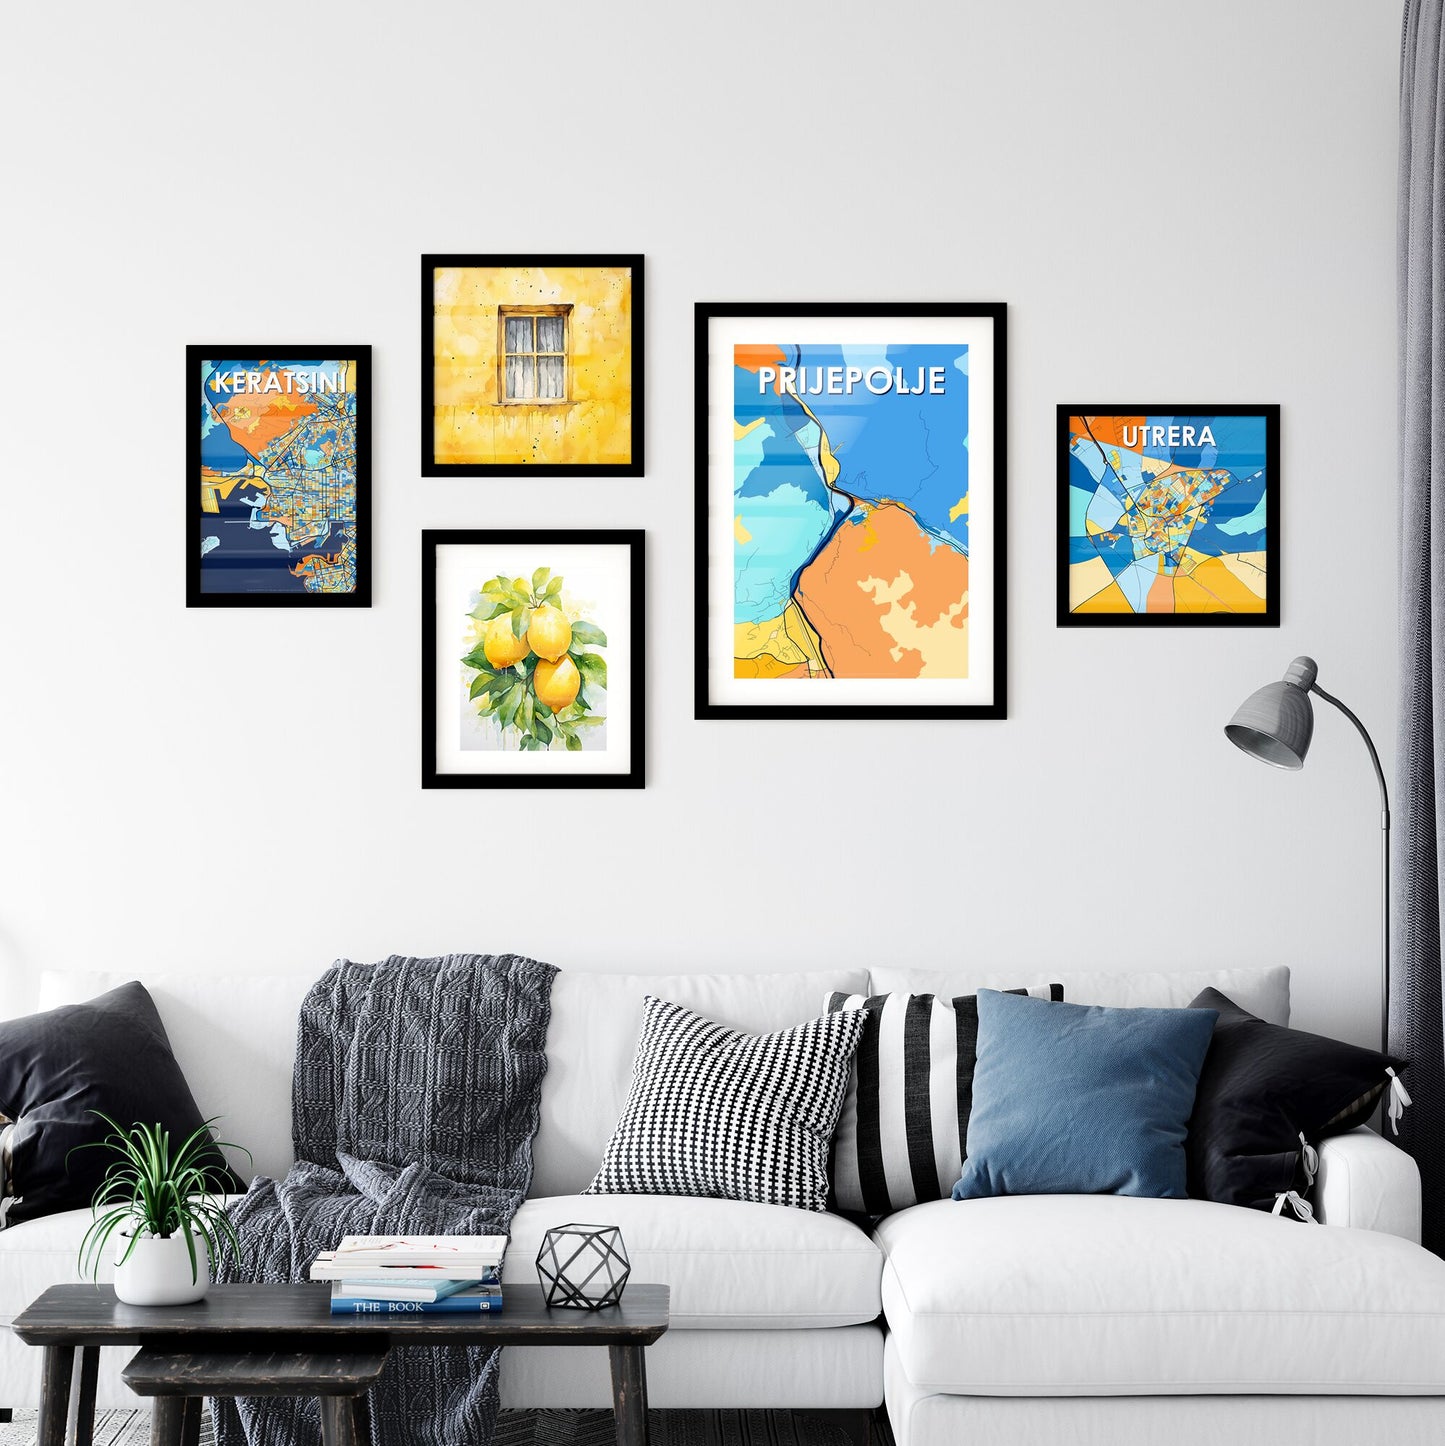 PRIJEPOLJE SERBIA Vibrant Colorful Art Map Poster Blue Orange